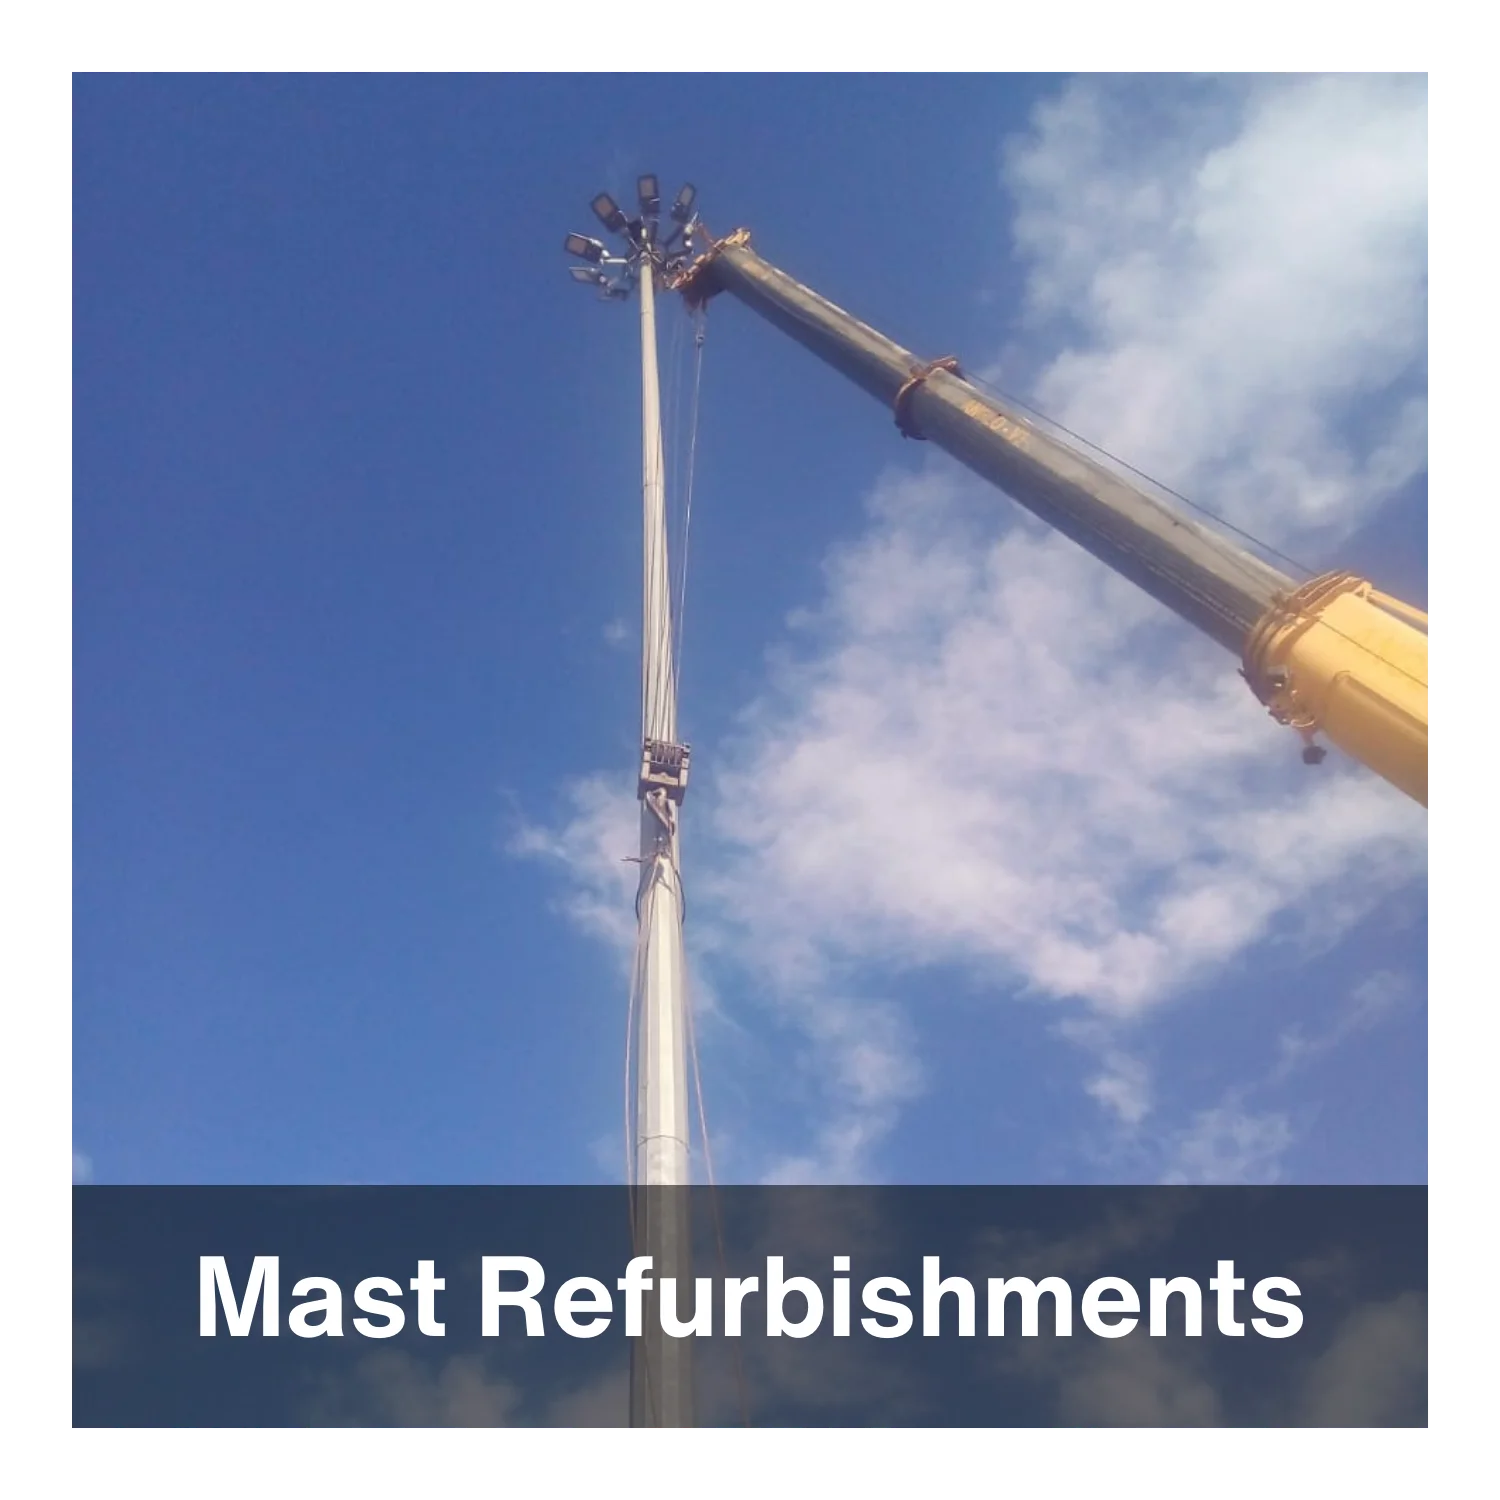 Mast Refurbishment example